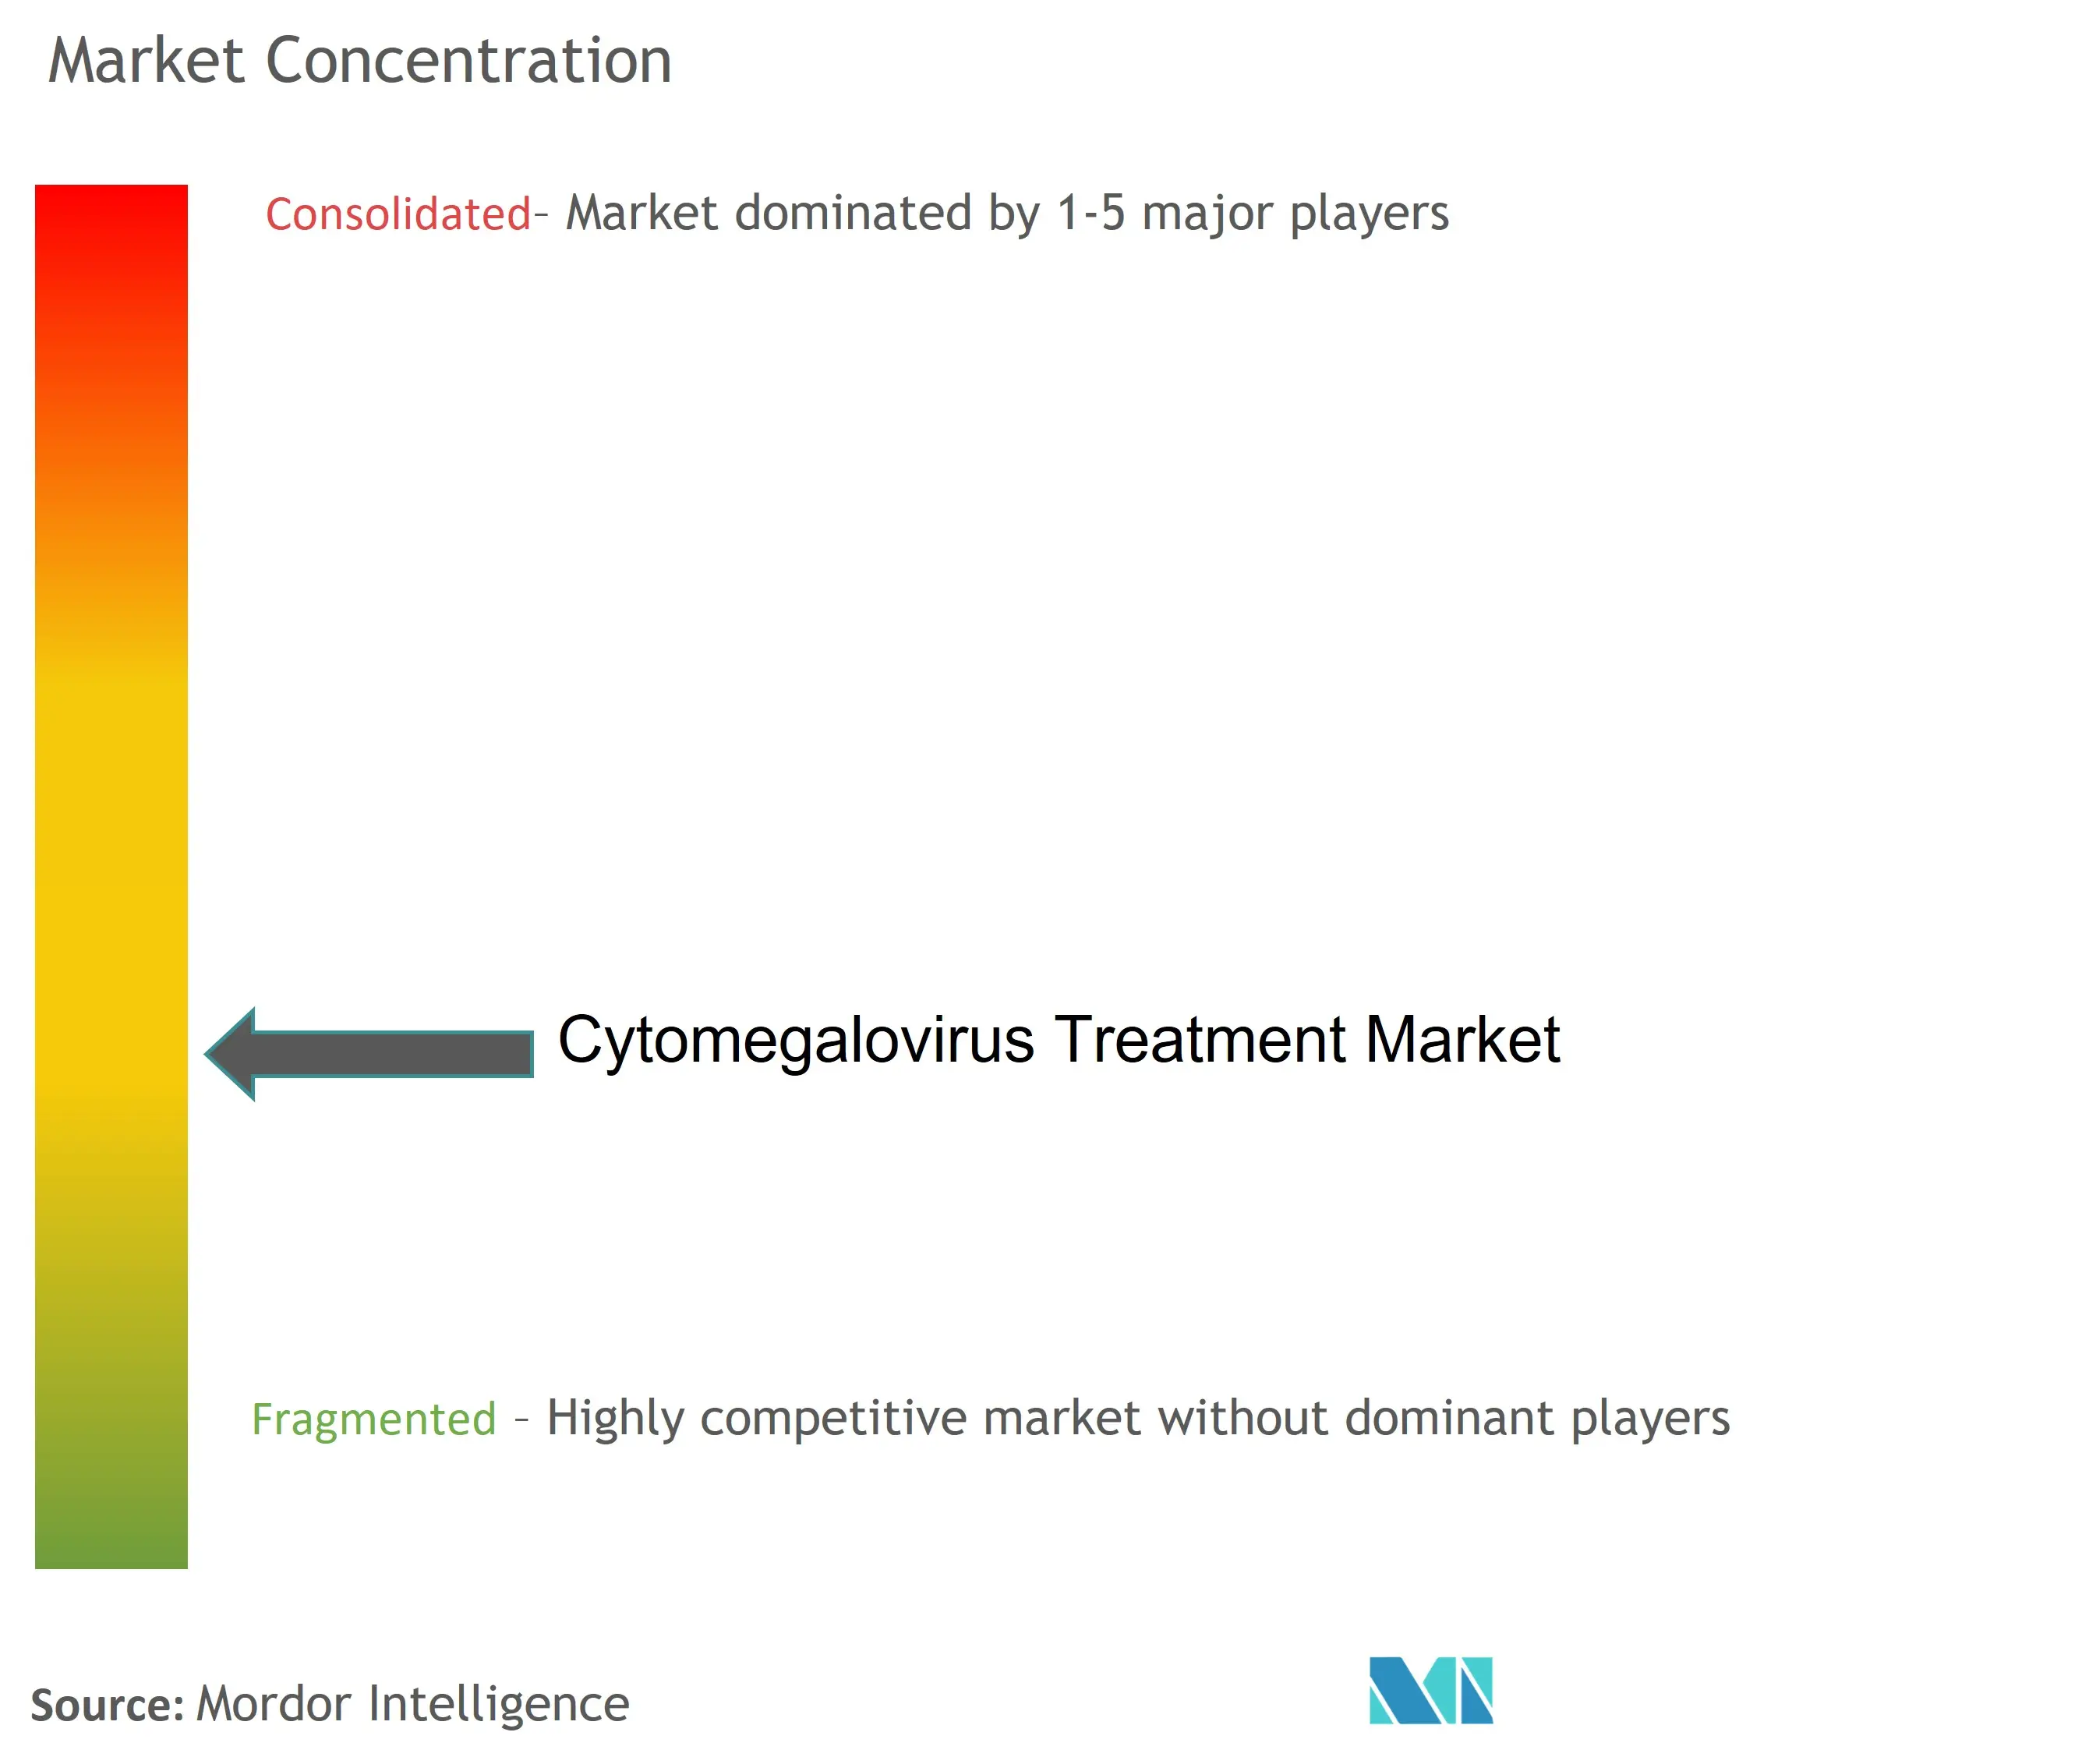 Cytomegalovirus Treatment Market Concentration